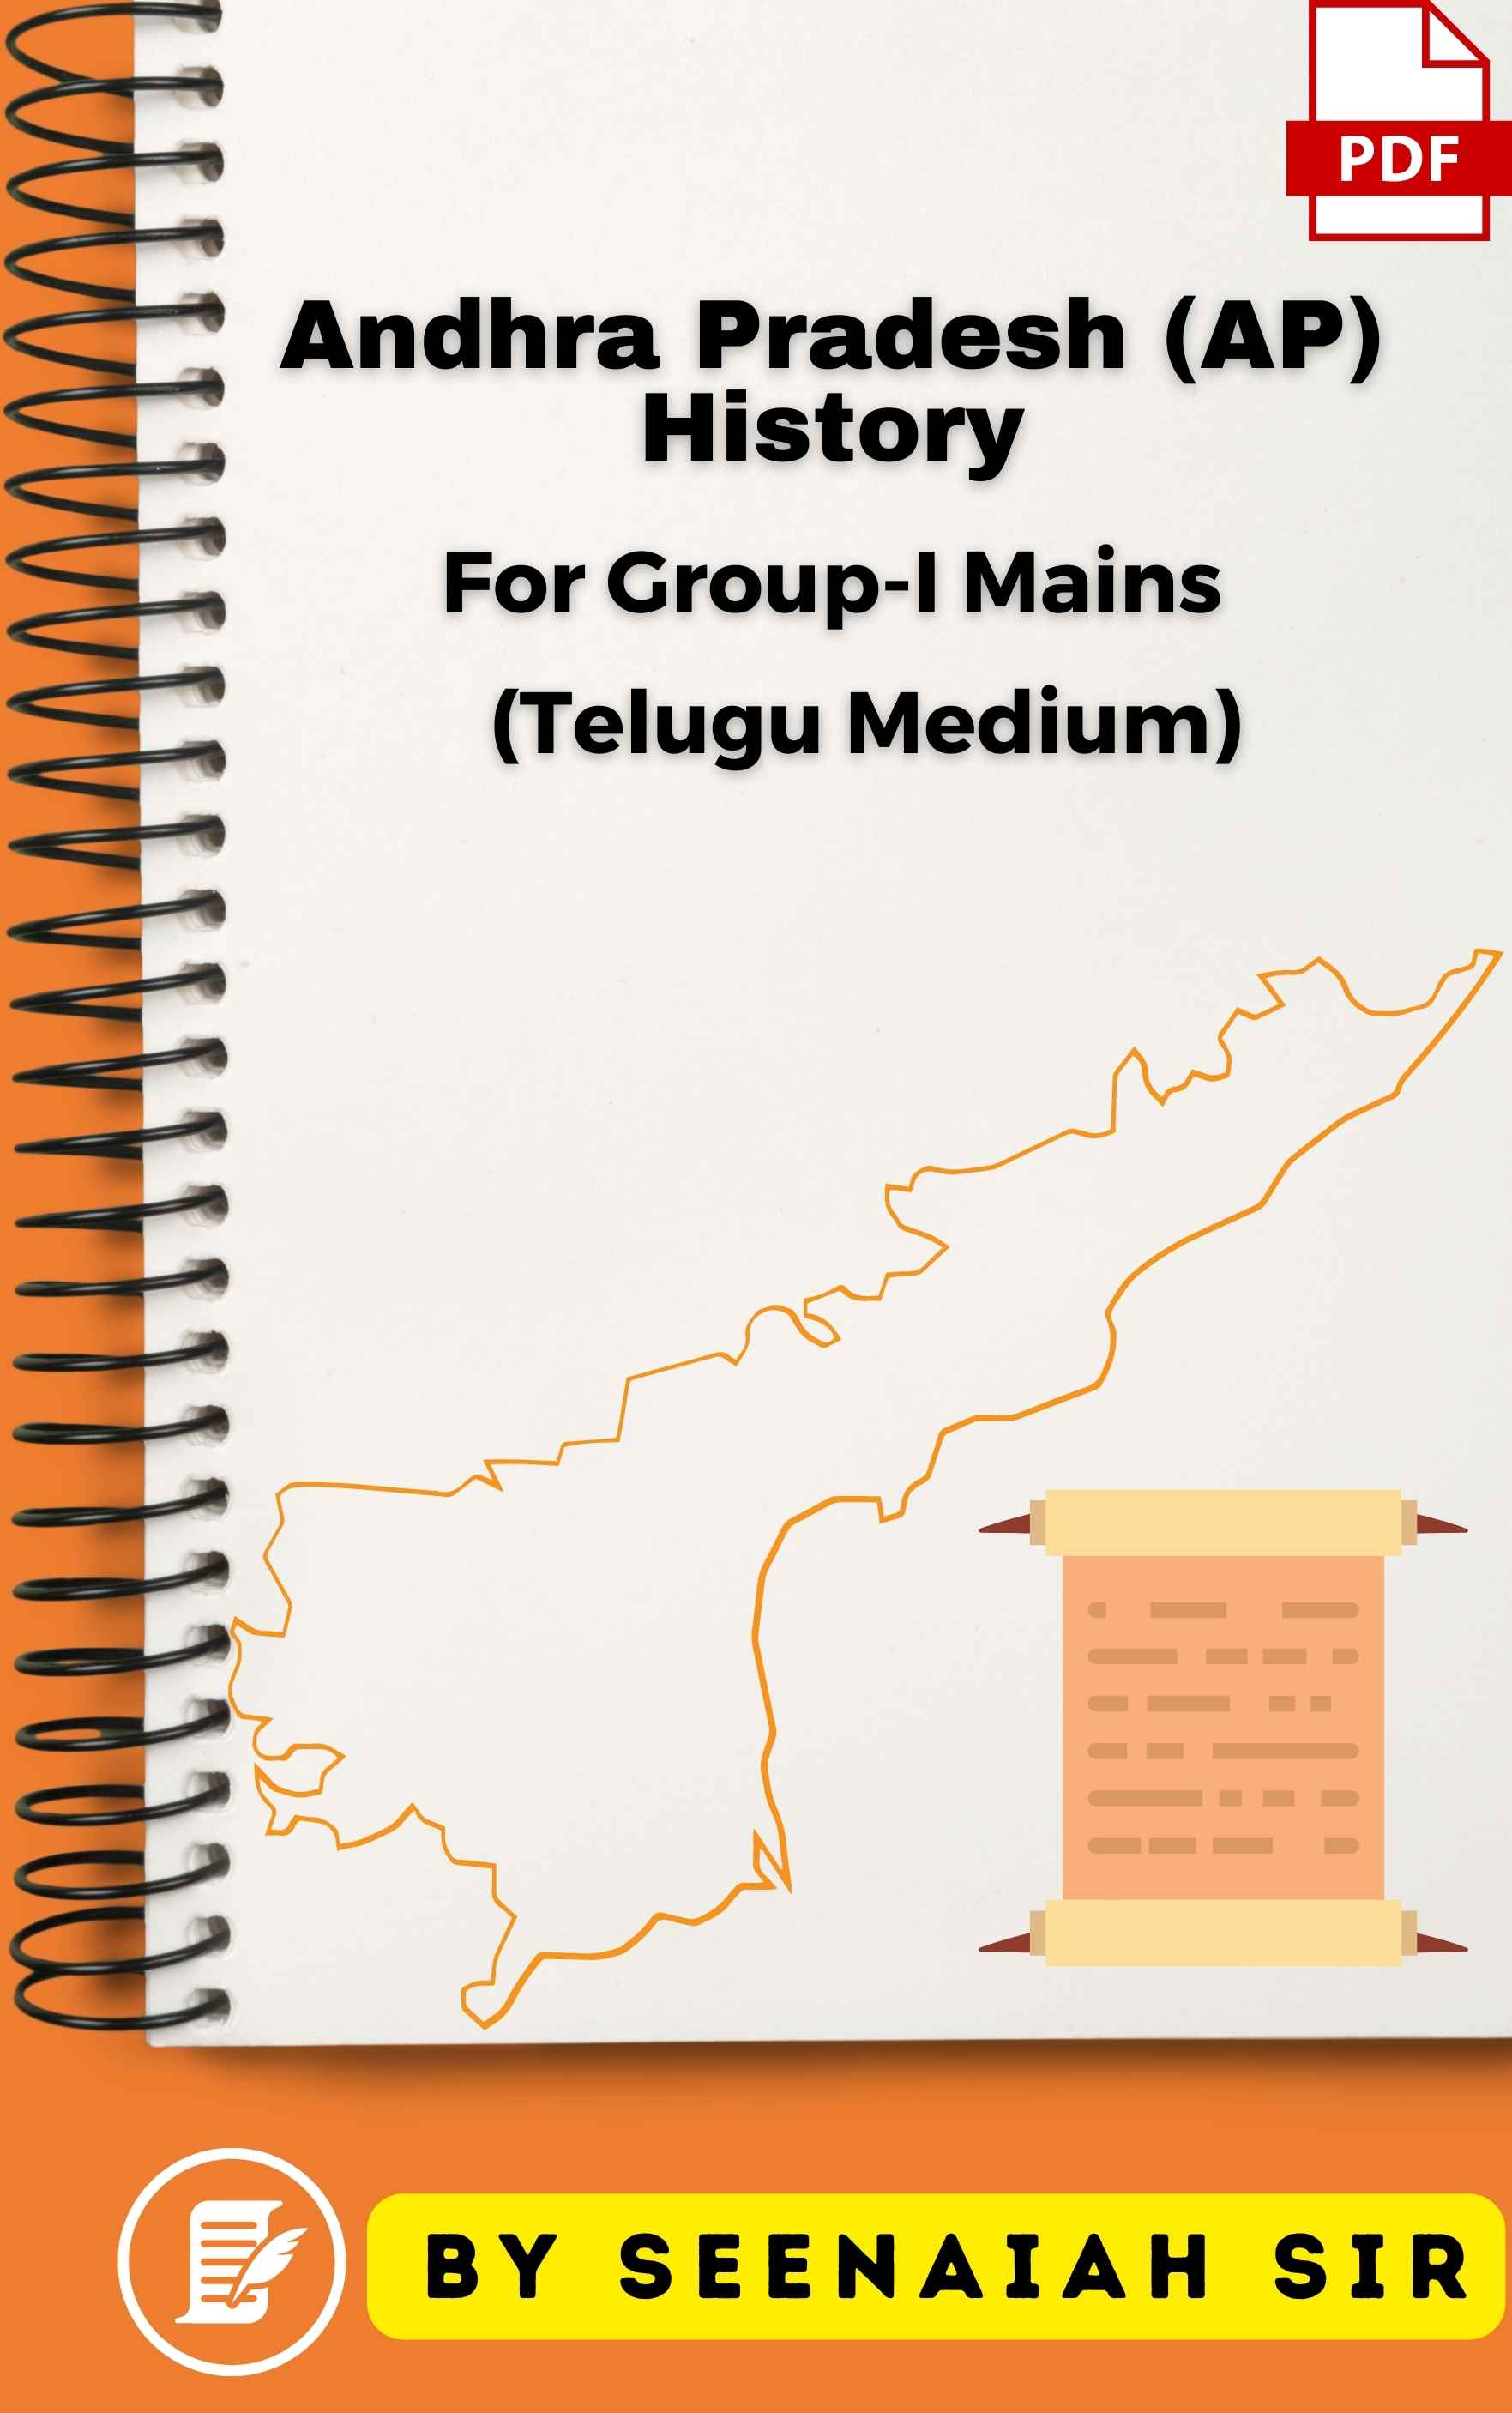 Andhra Pradesh (AP) History for Group-I Mains (Hand Written Class Notes Telugu Medium)